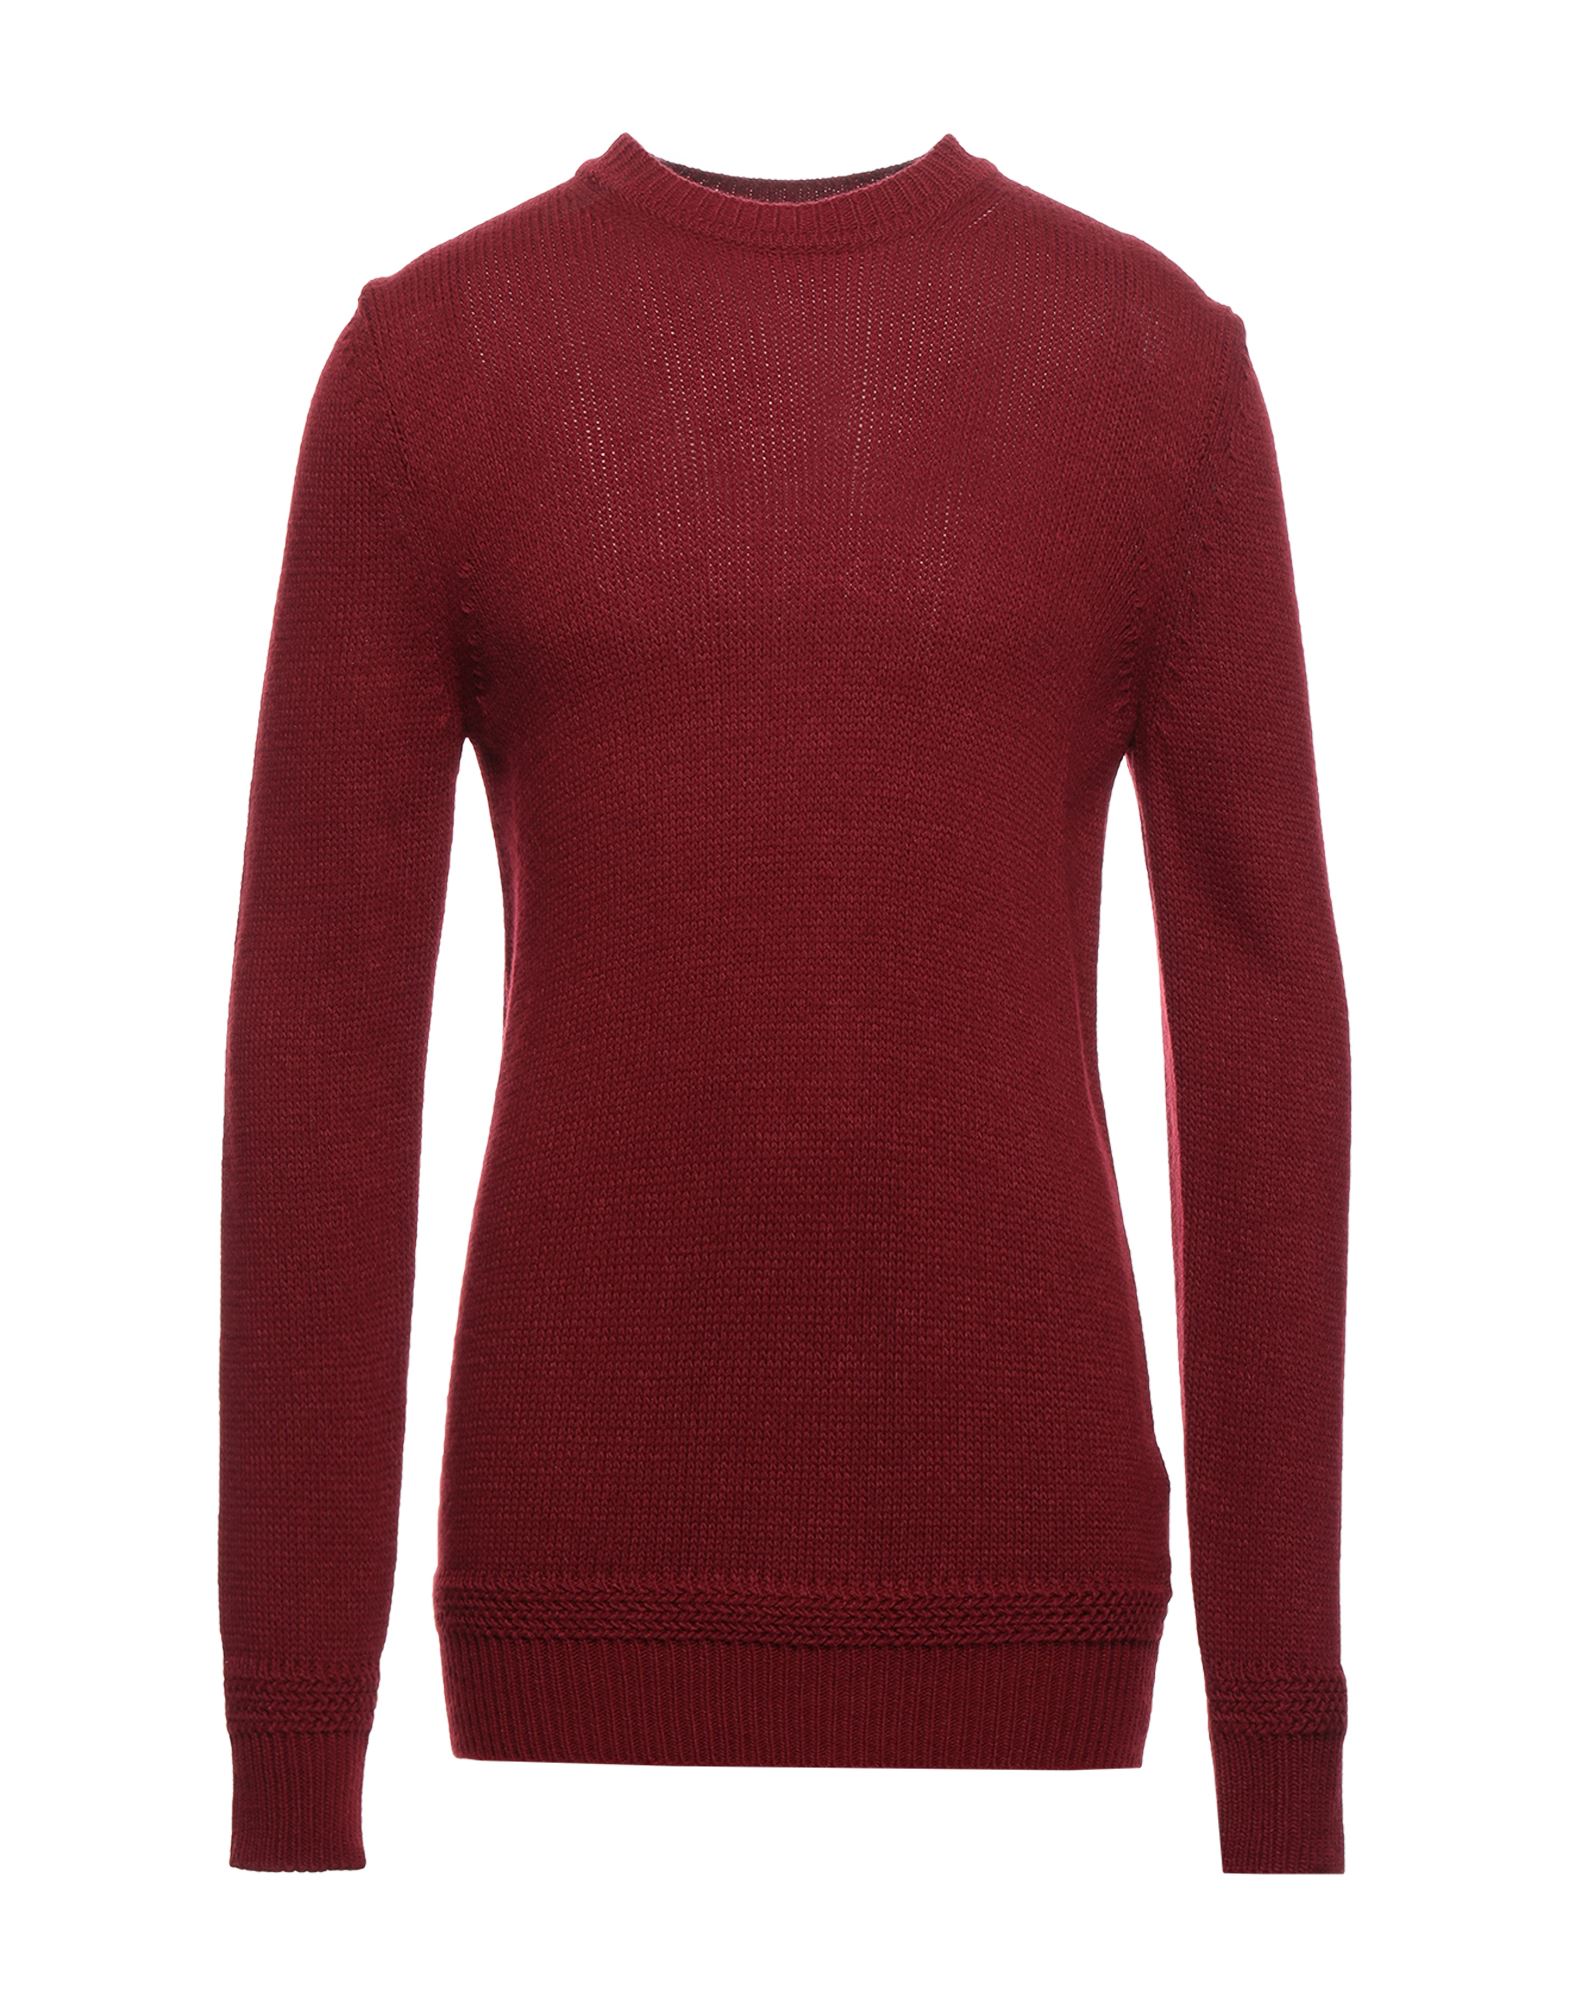 Tsd12 Man Sweater Burgundy Size Xxl Dralon In Red